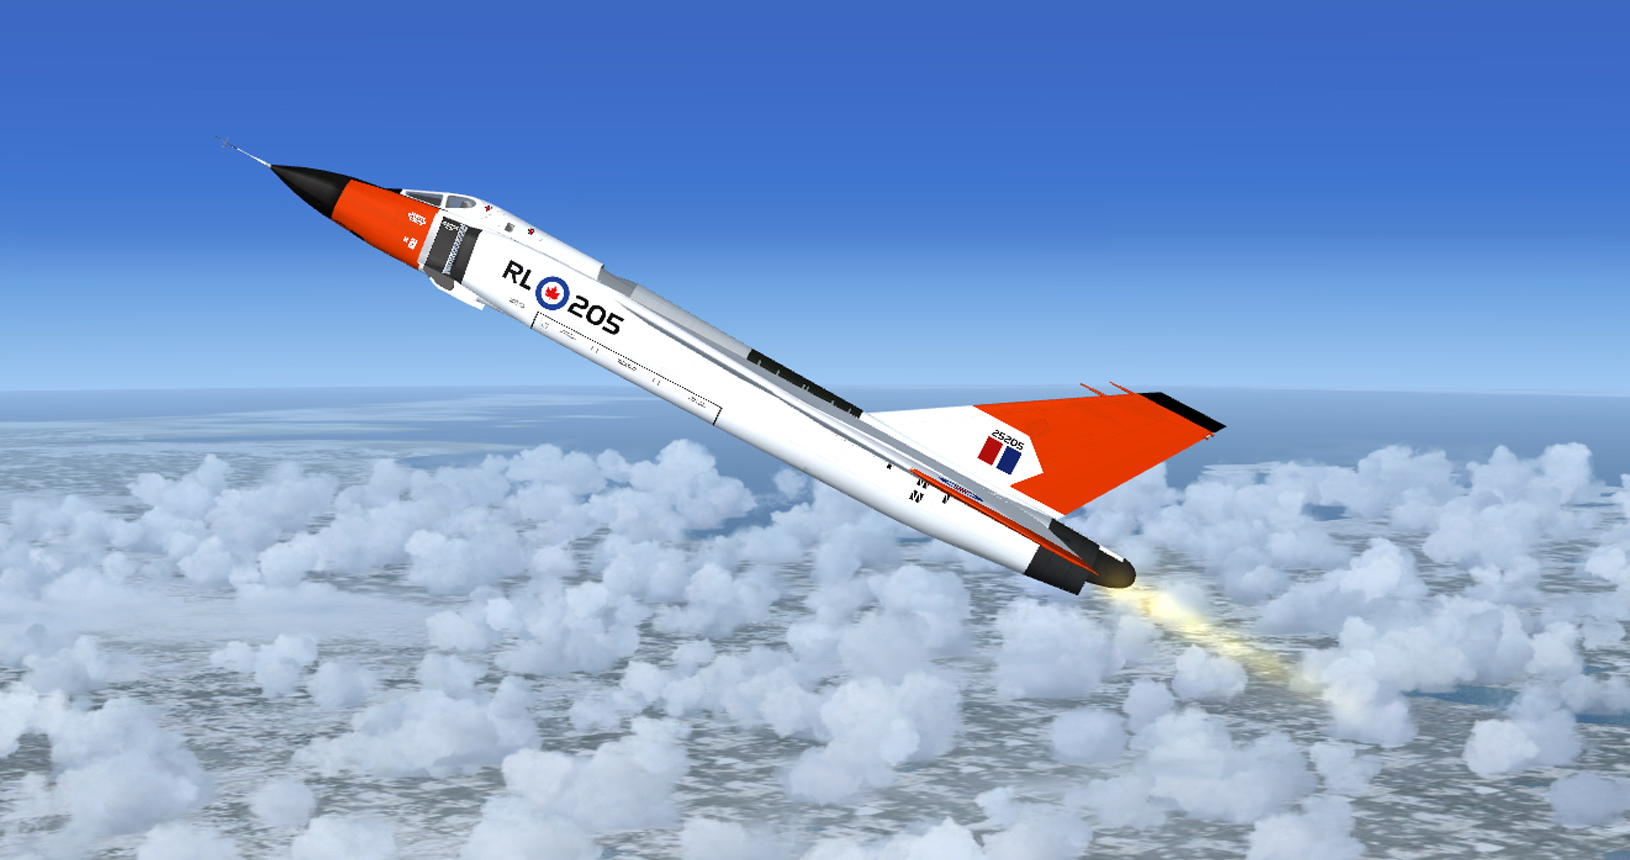 XP CF-105 Arrow v1